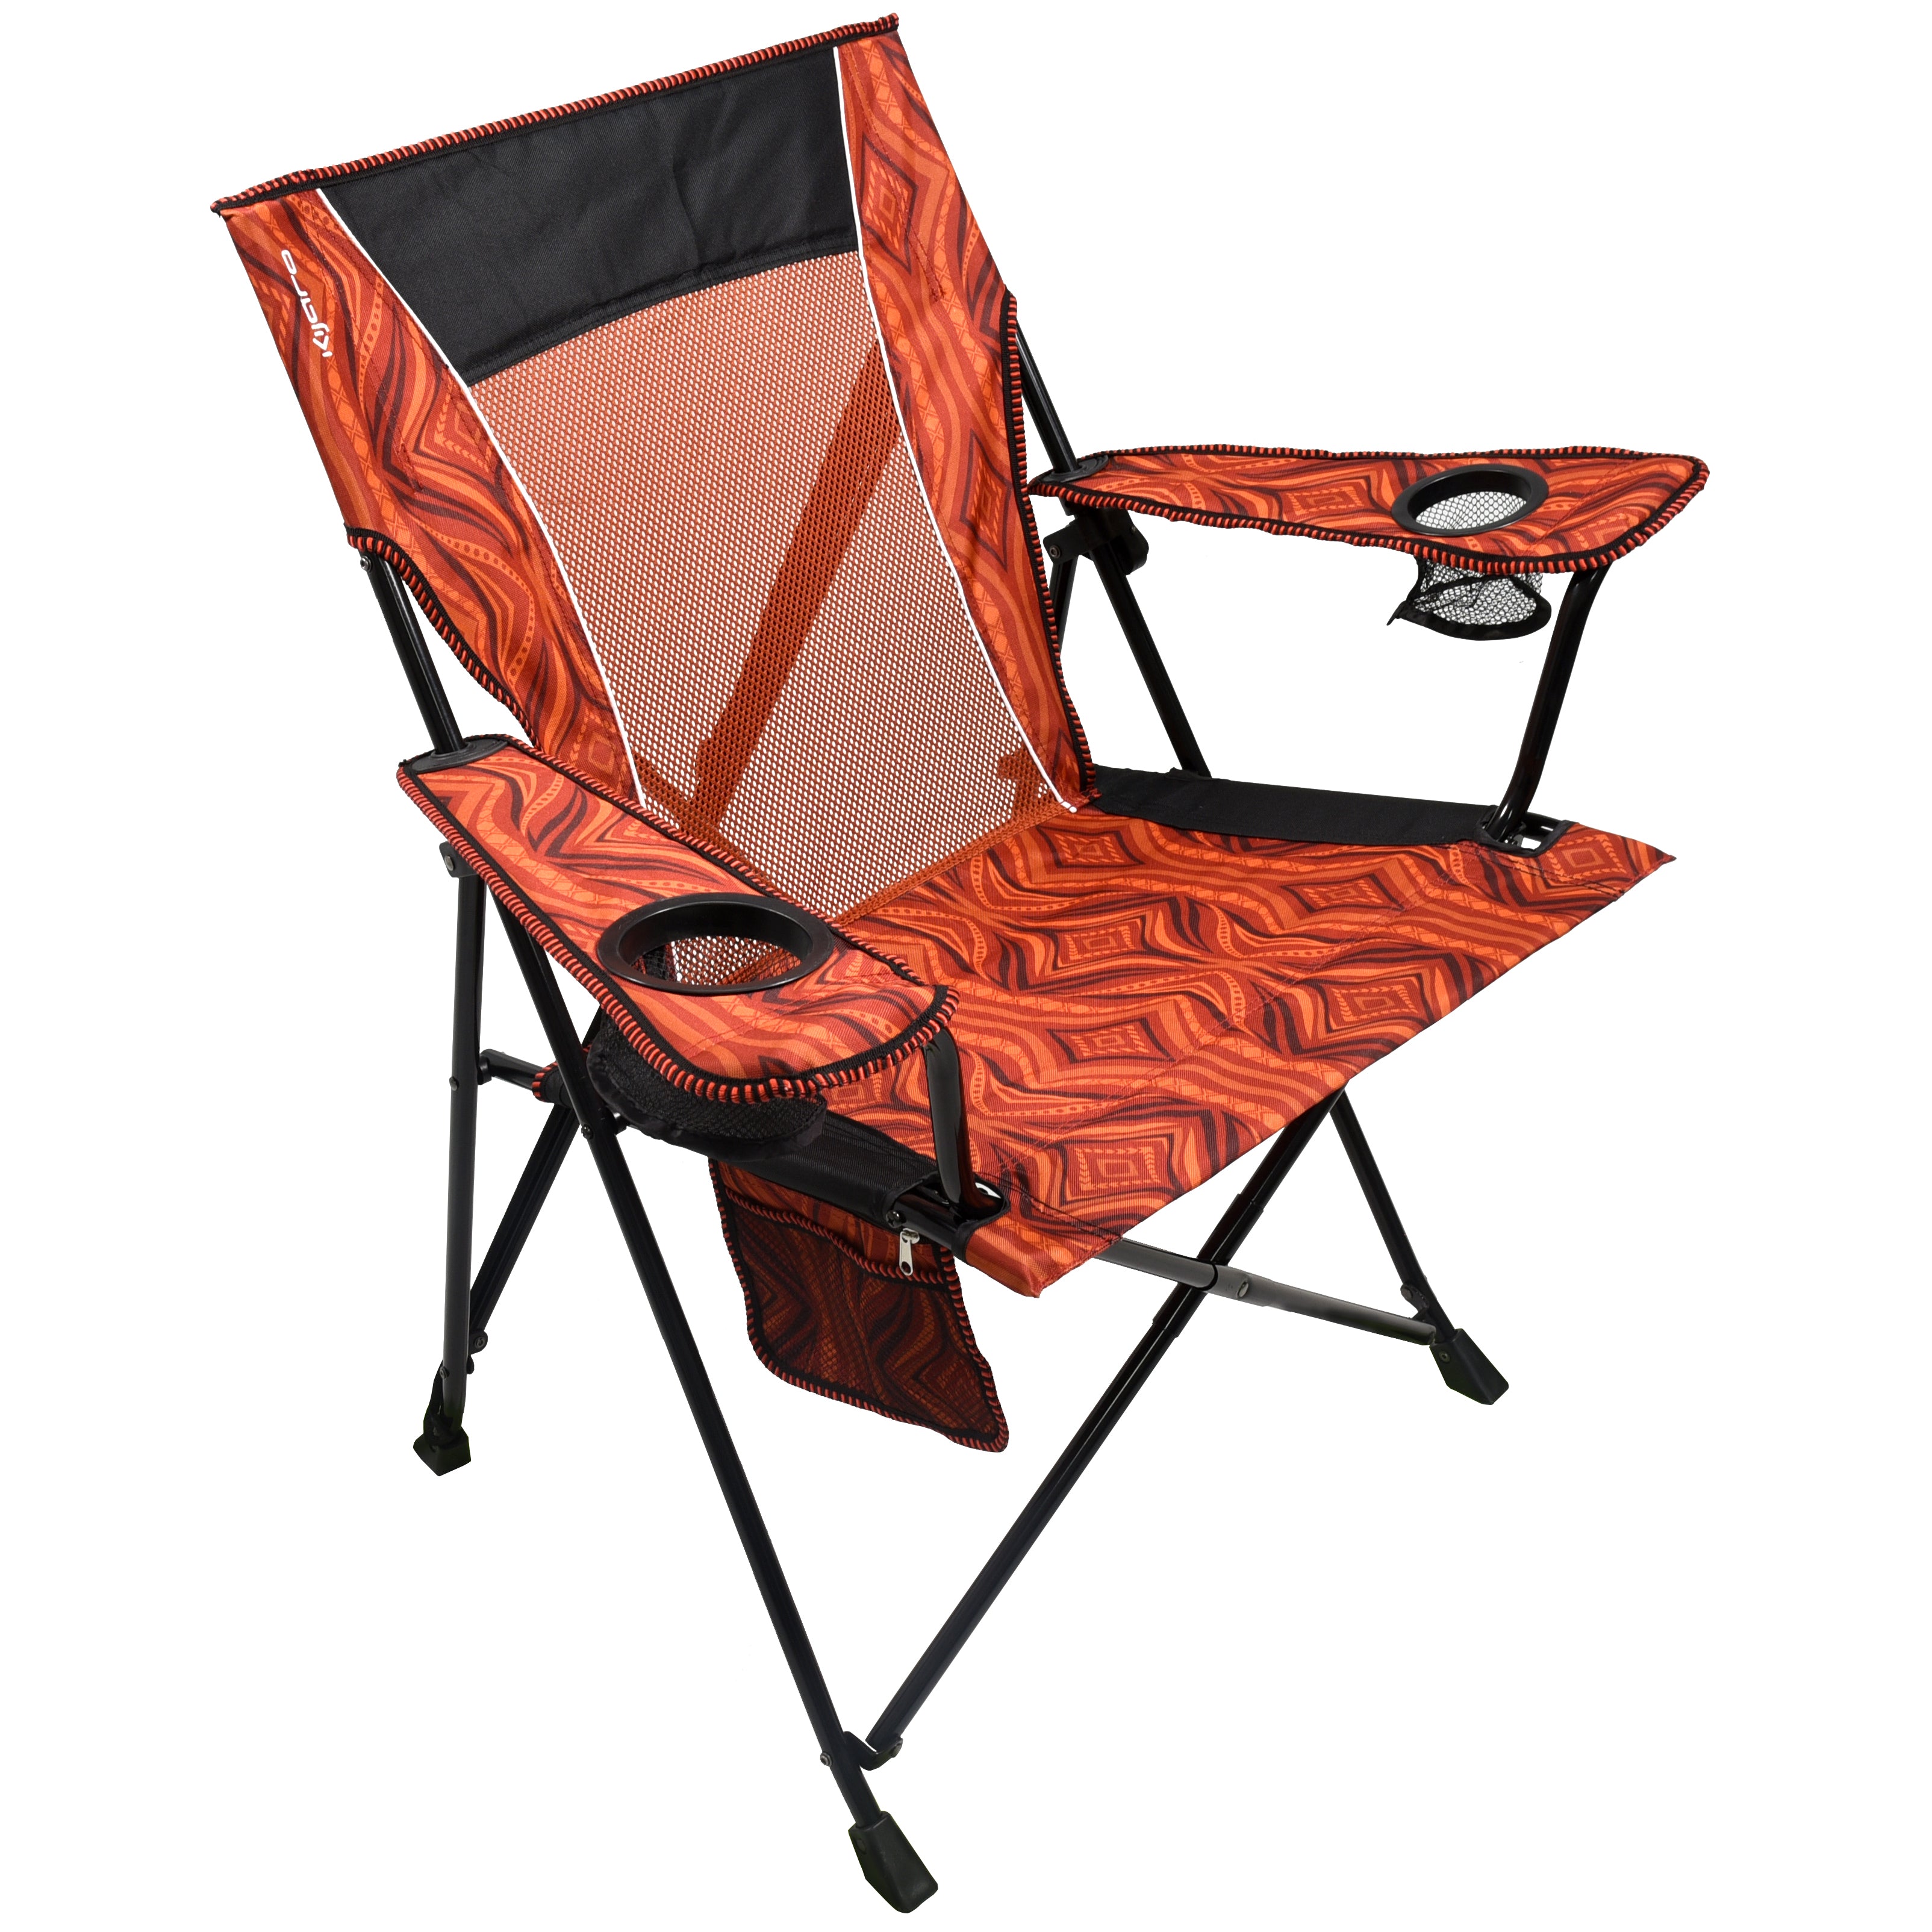 Dual Lock® Destination Print Chair - 300 lb Weight Capacity